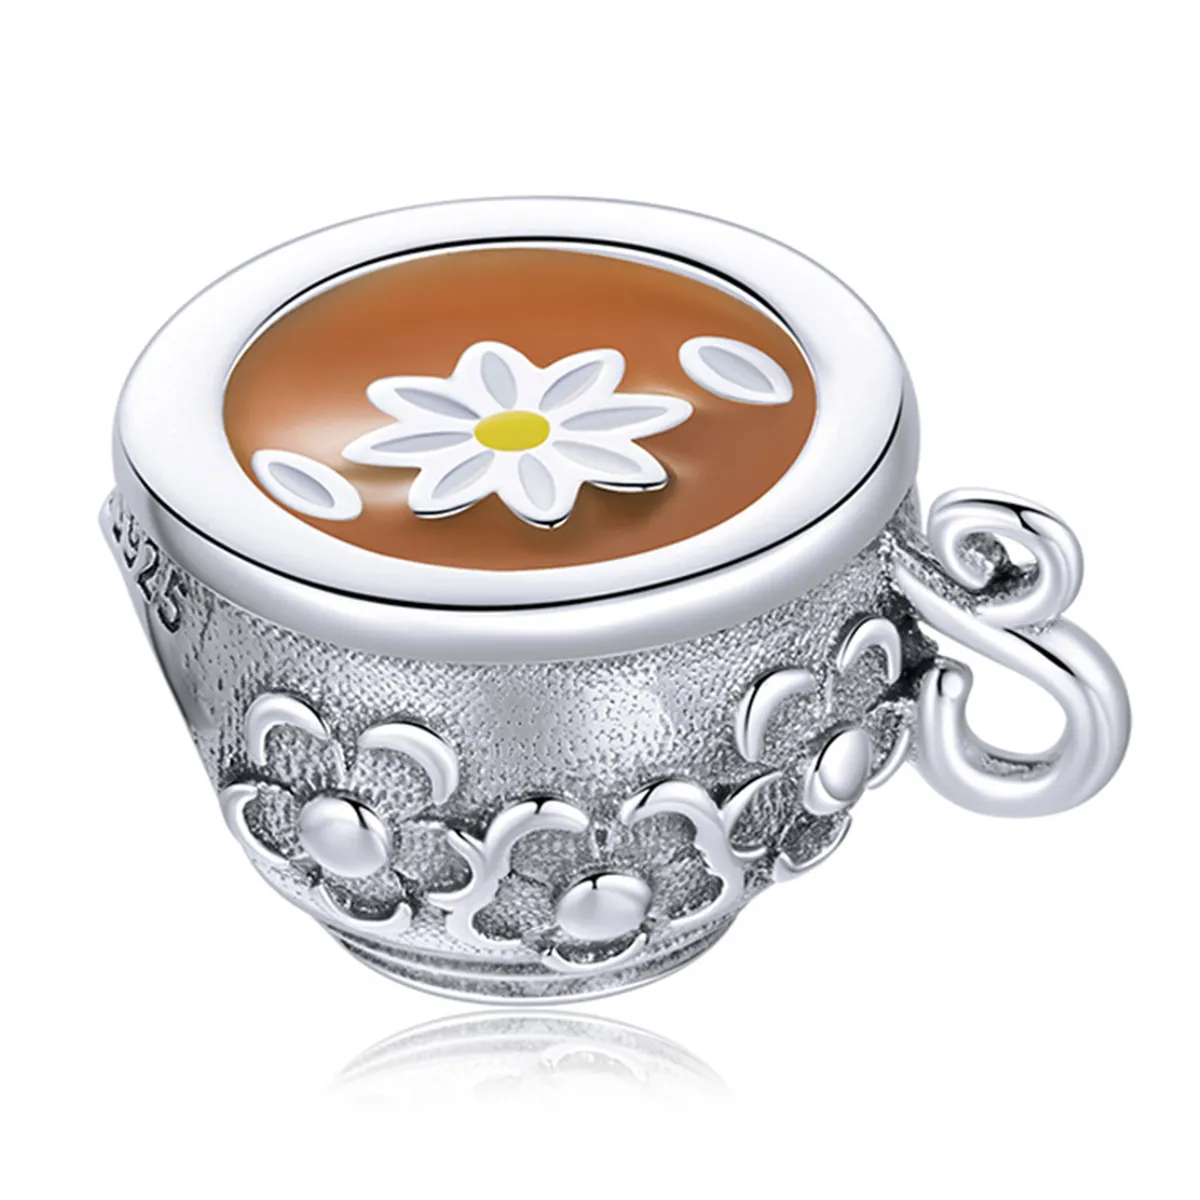 pandora style flower teacup charm scc1915